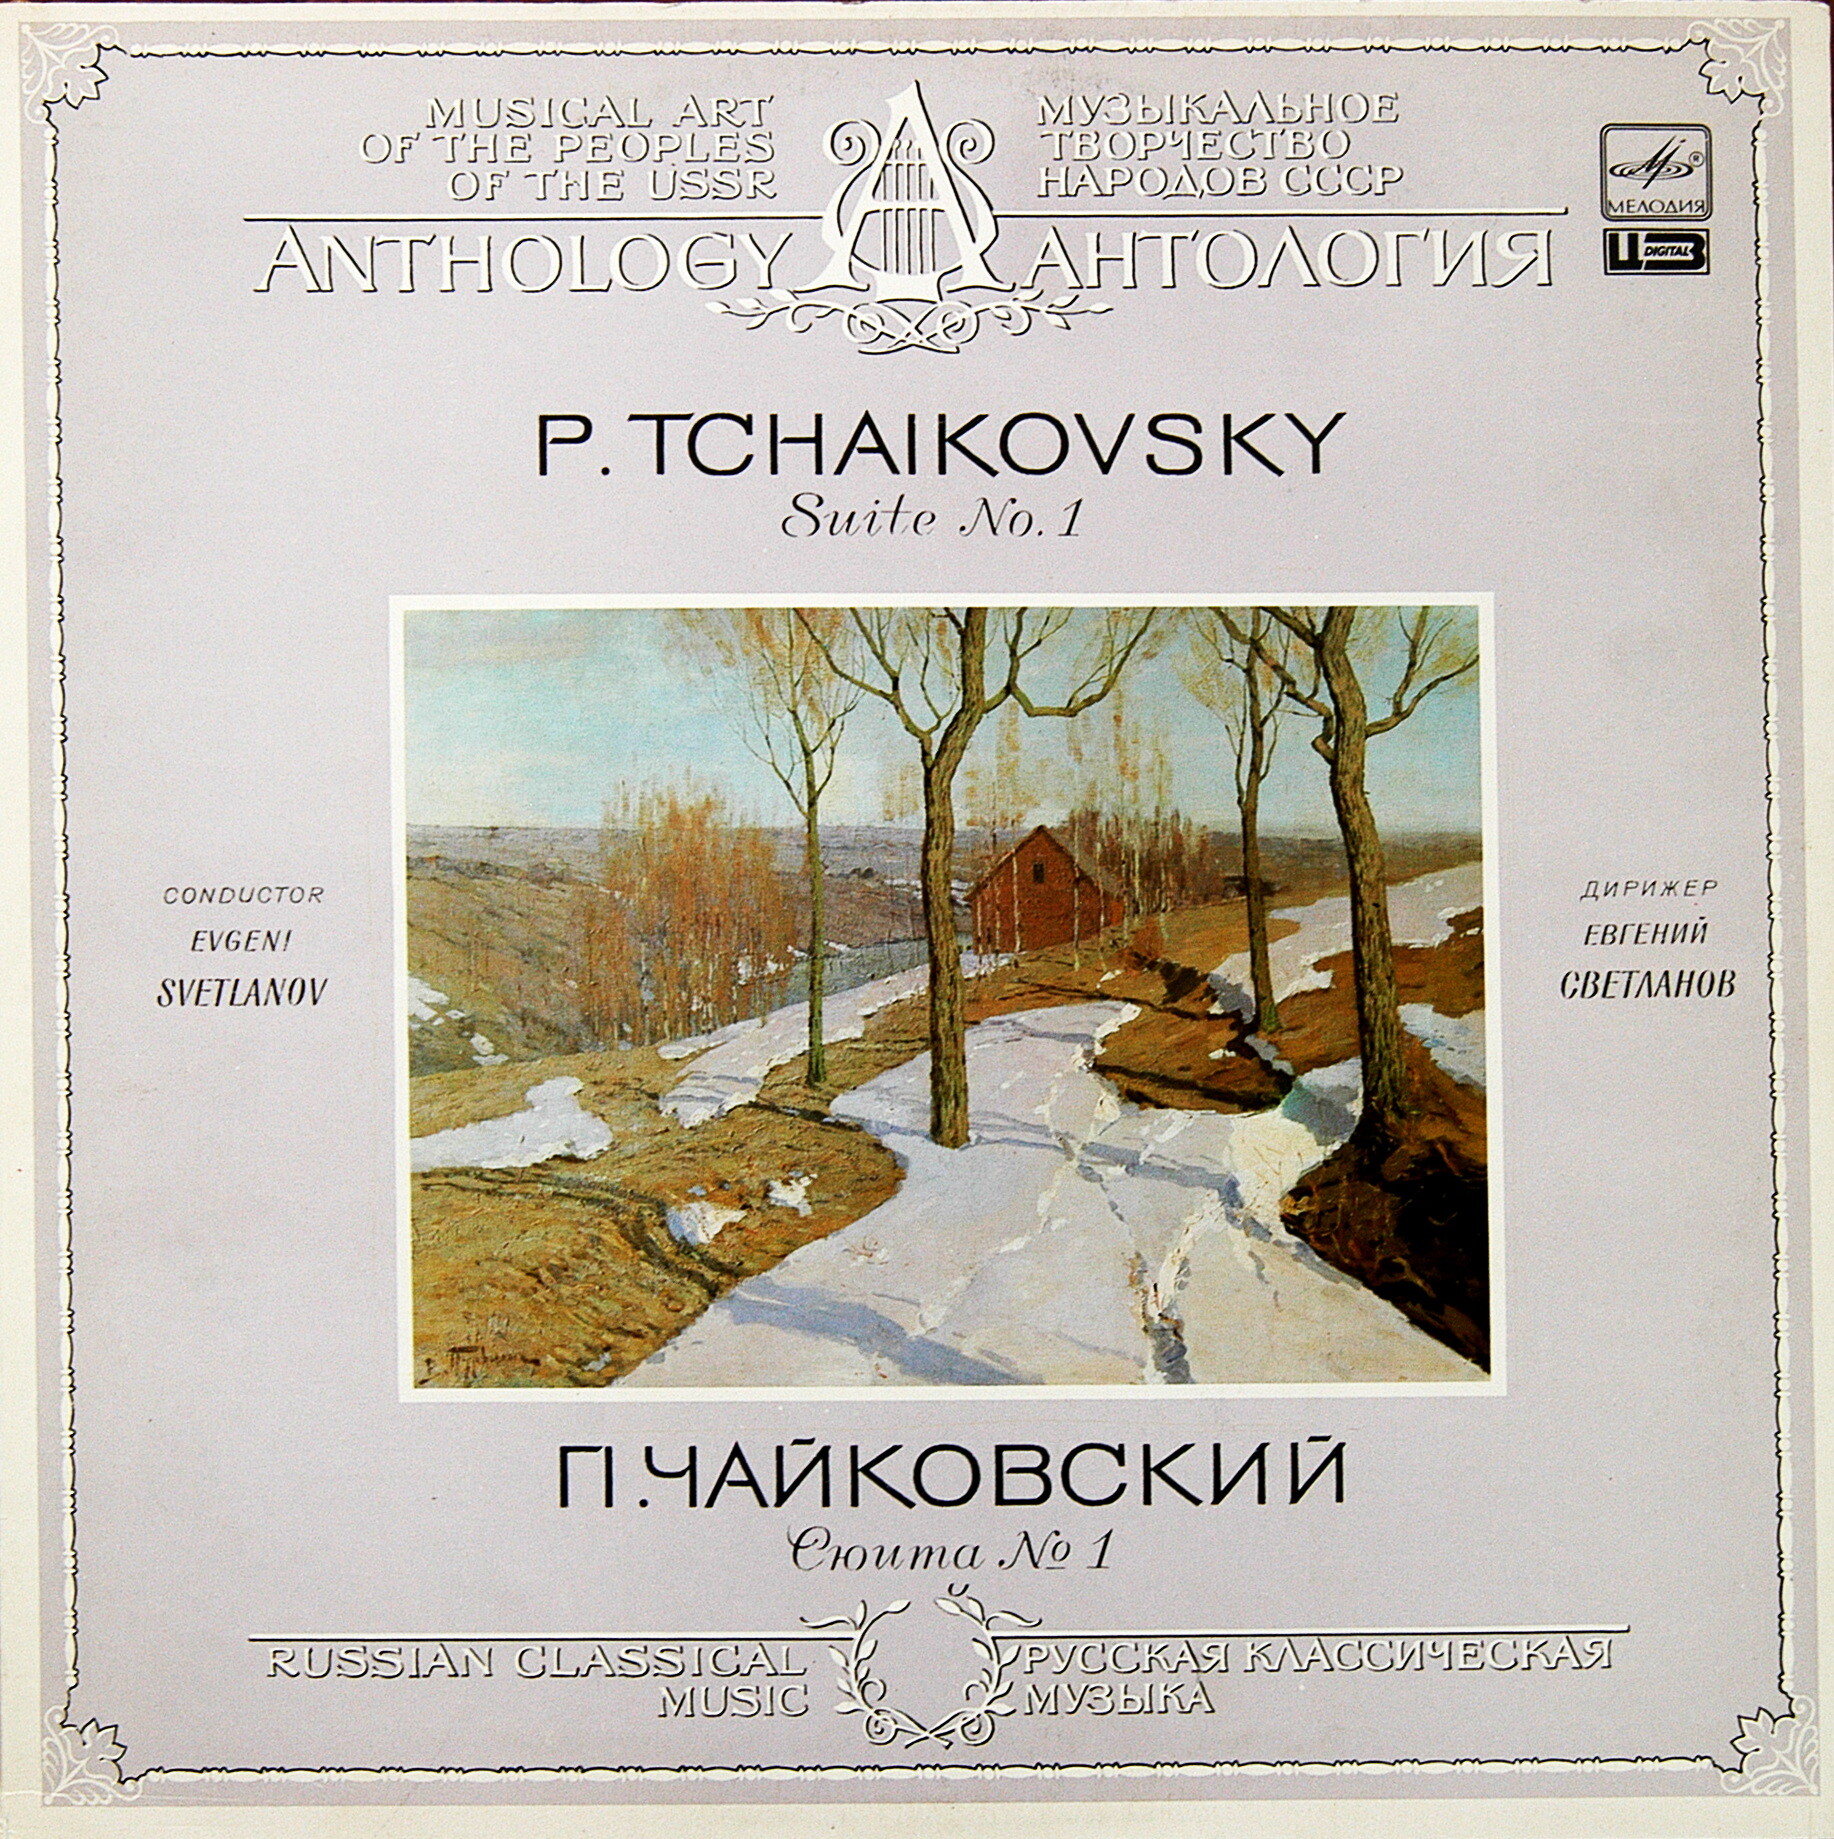 П. Чайковский: Сюита № 1 ре минор, соч. 43 (Е. Светланов)